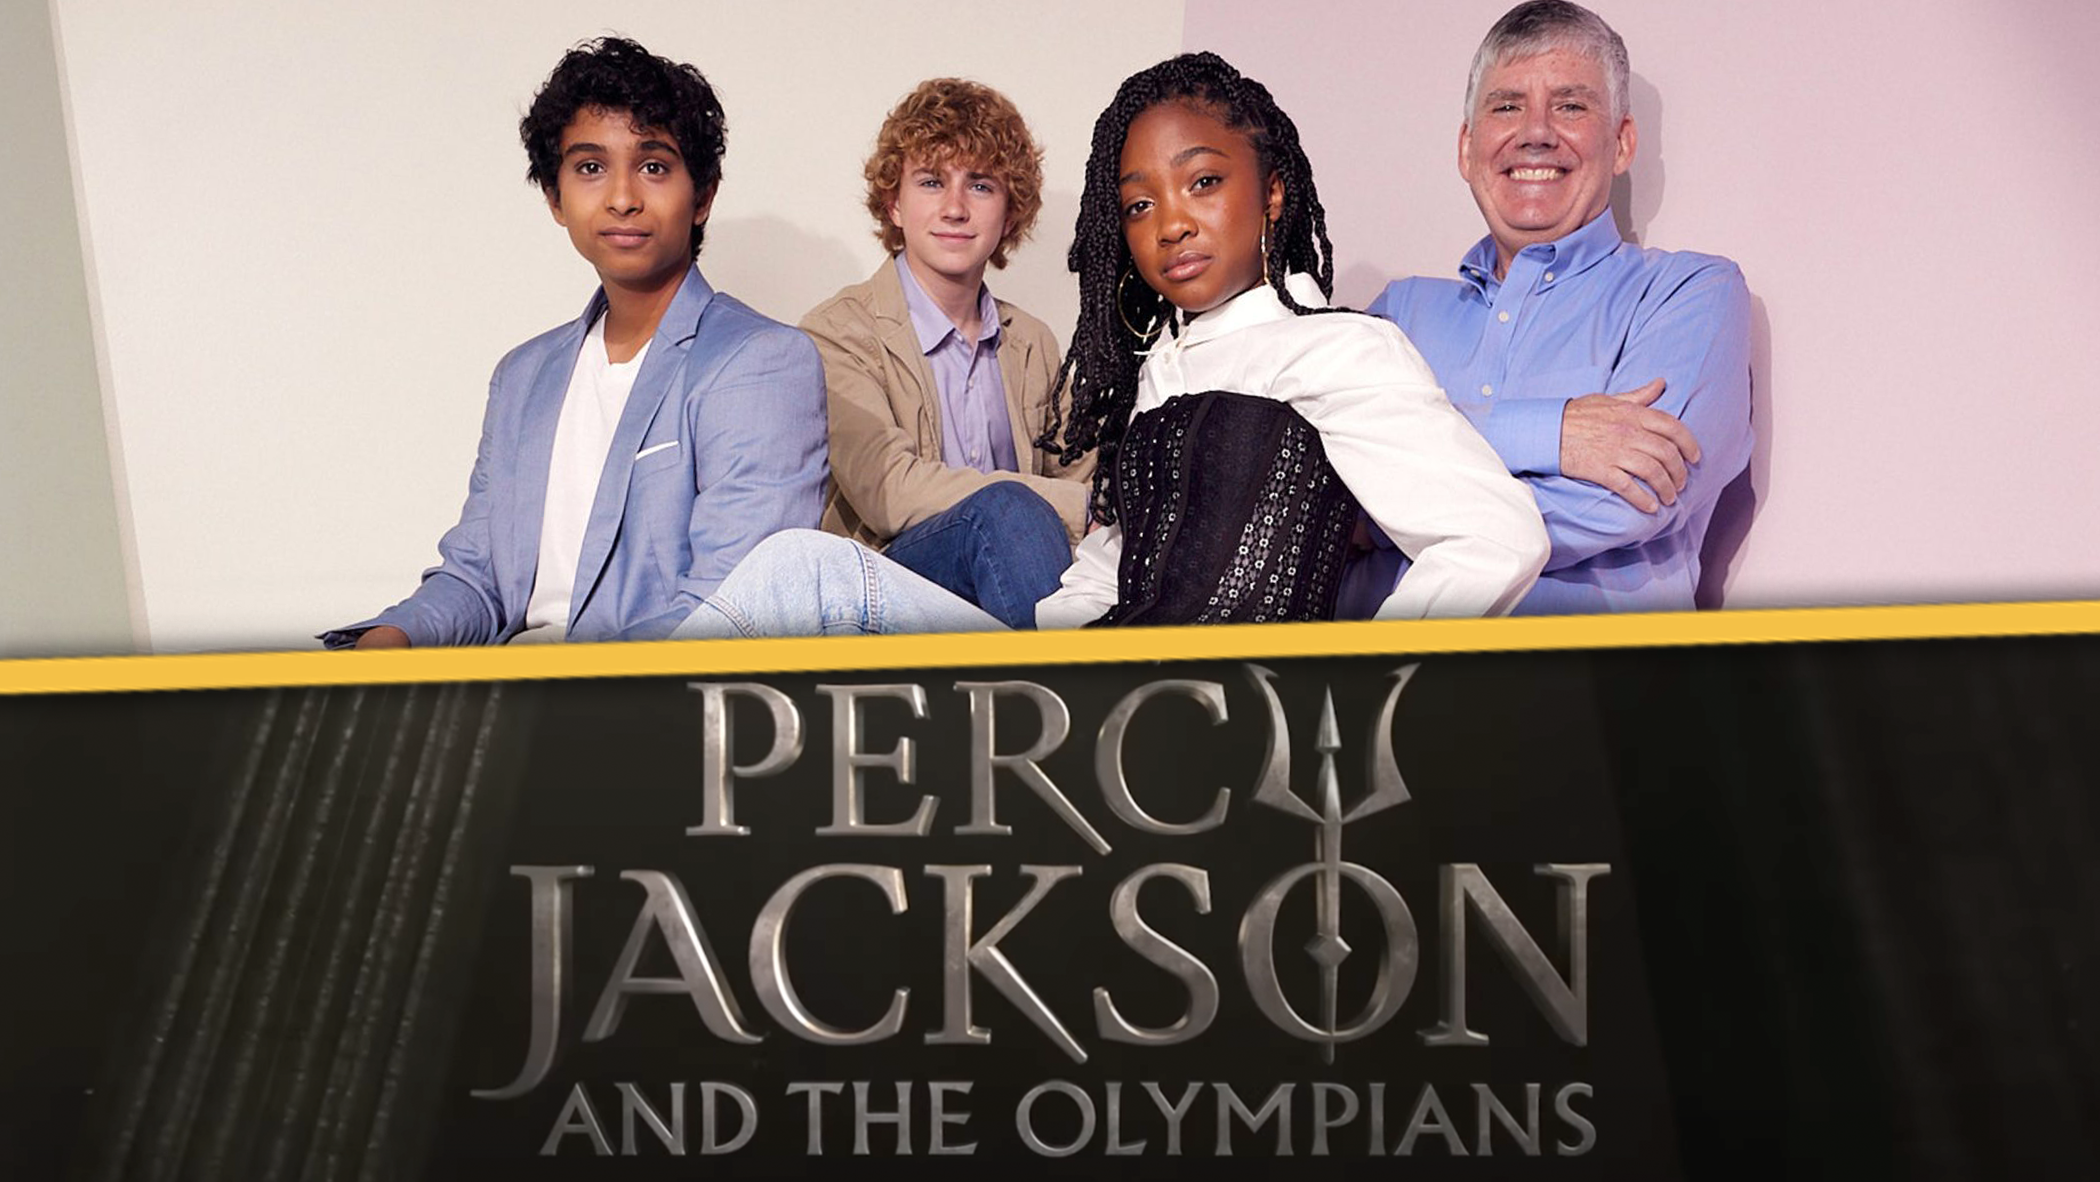 Percy Jackson